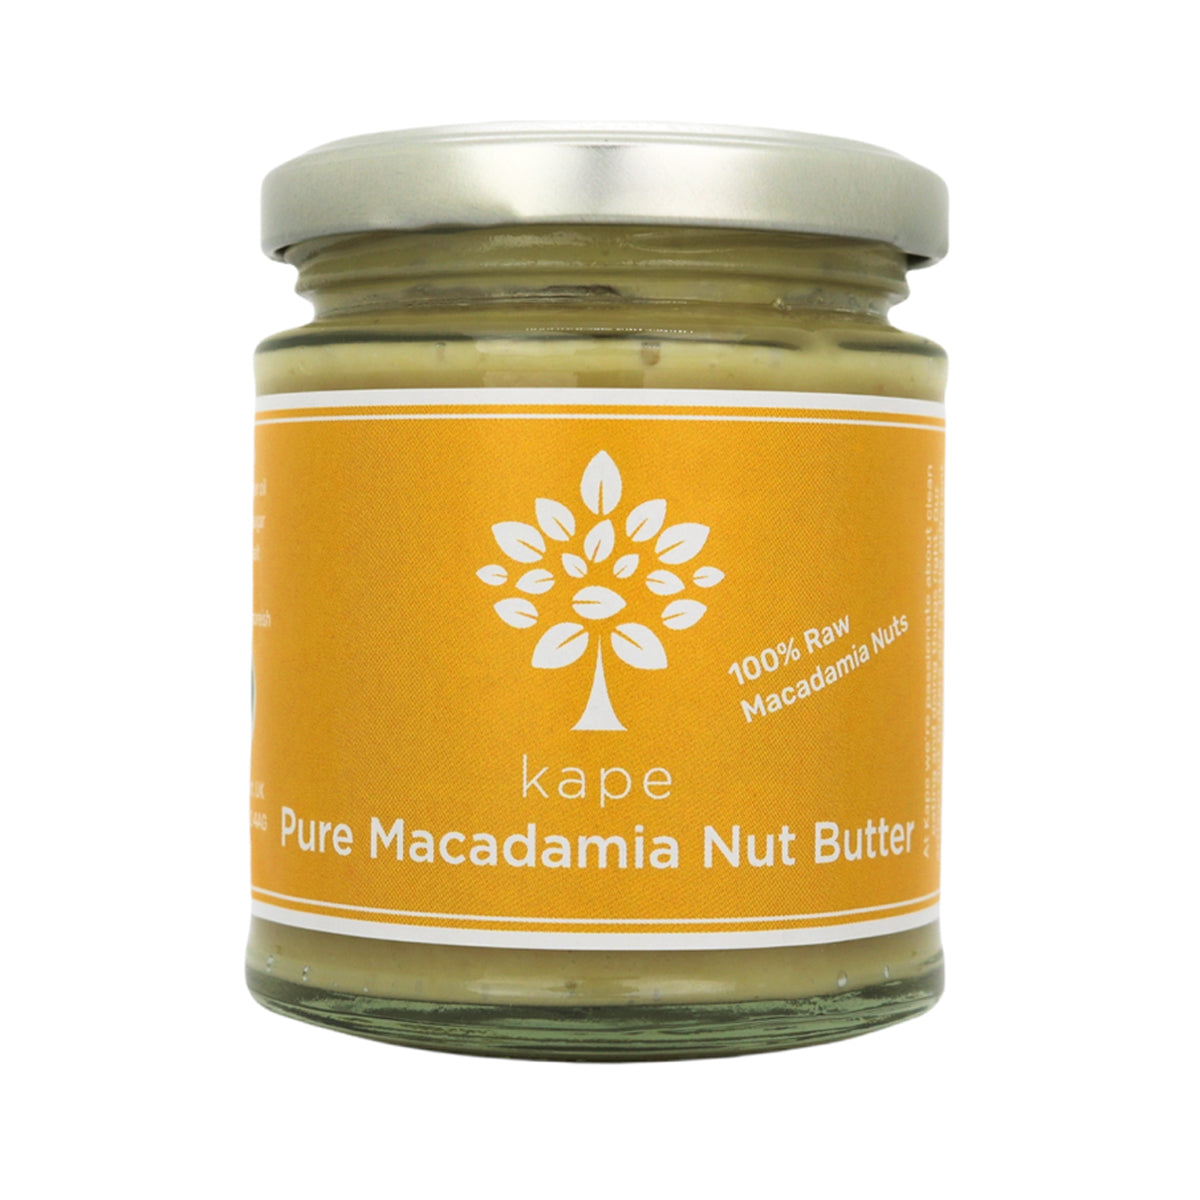 Pure Macadamia Nut Butter